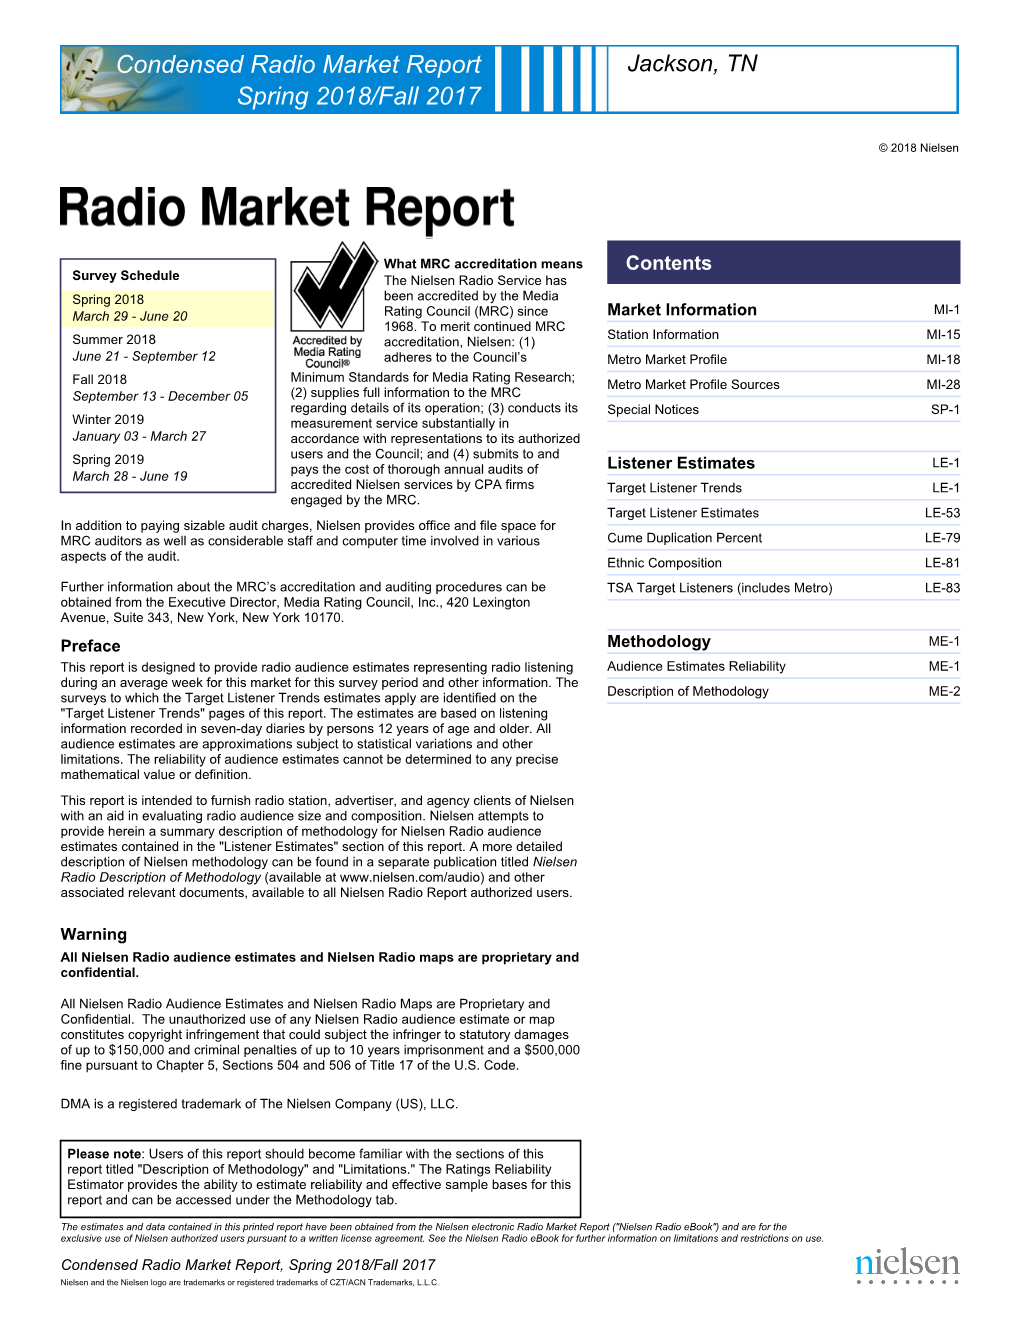 Condensed Radio Market Report Spring 2018/Fall 2017